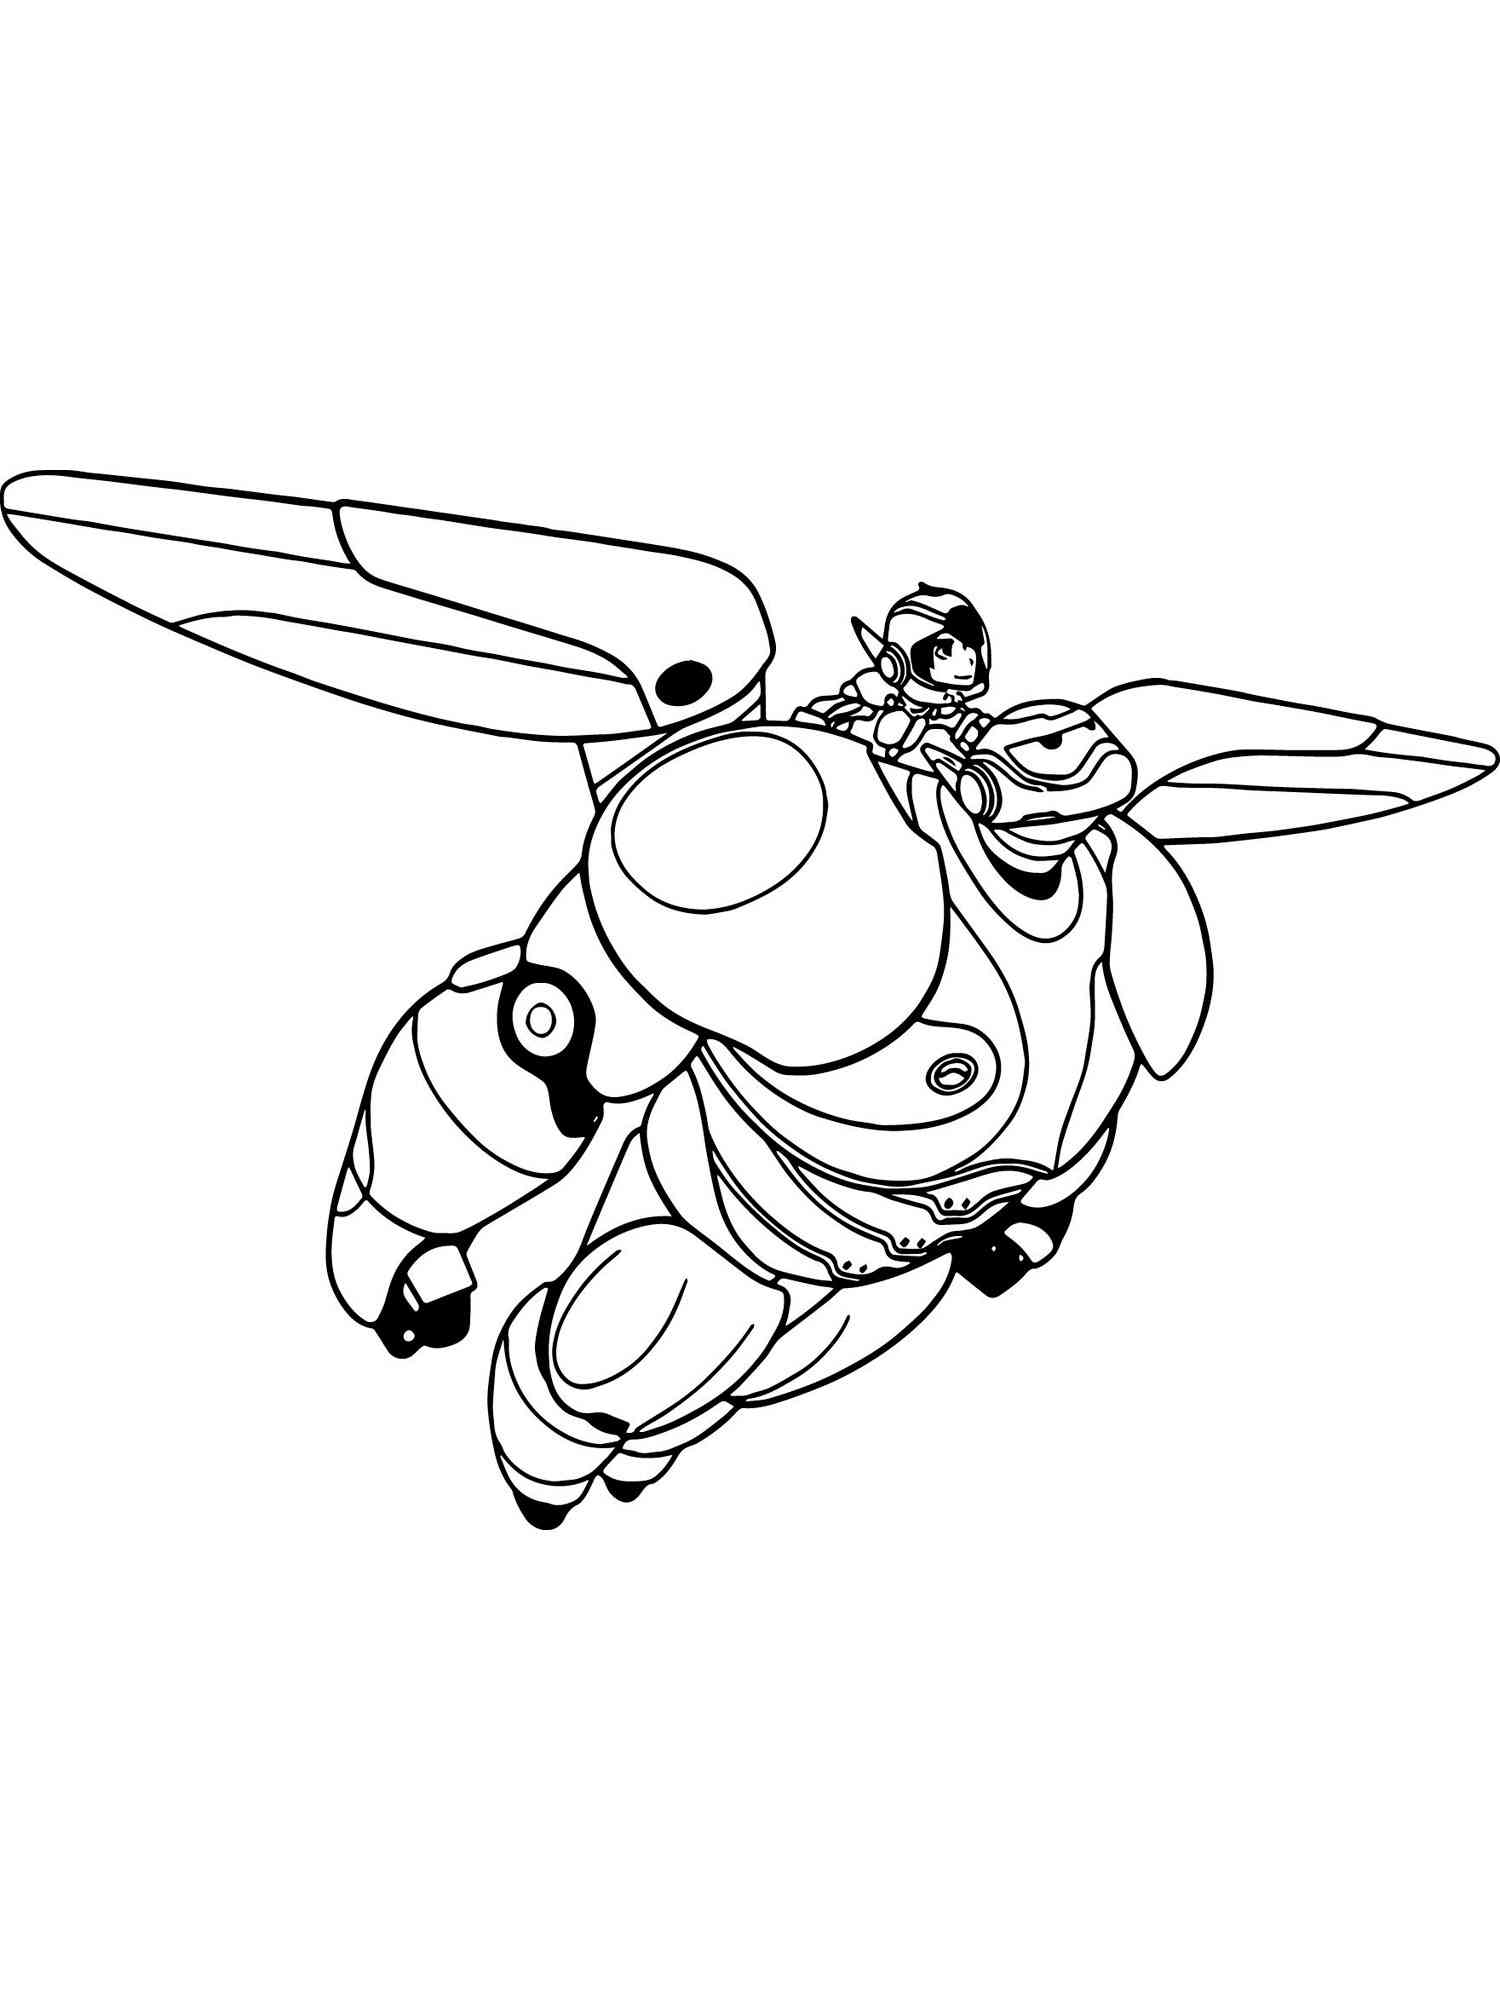 Baymax and Hiro Flying coloring page